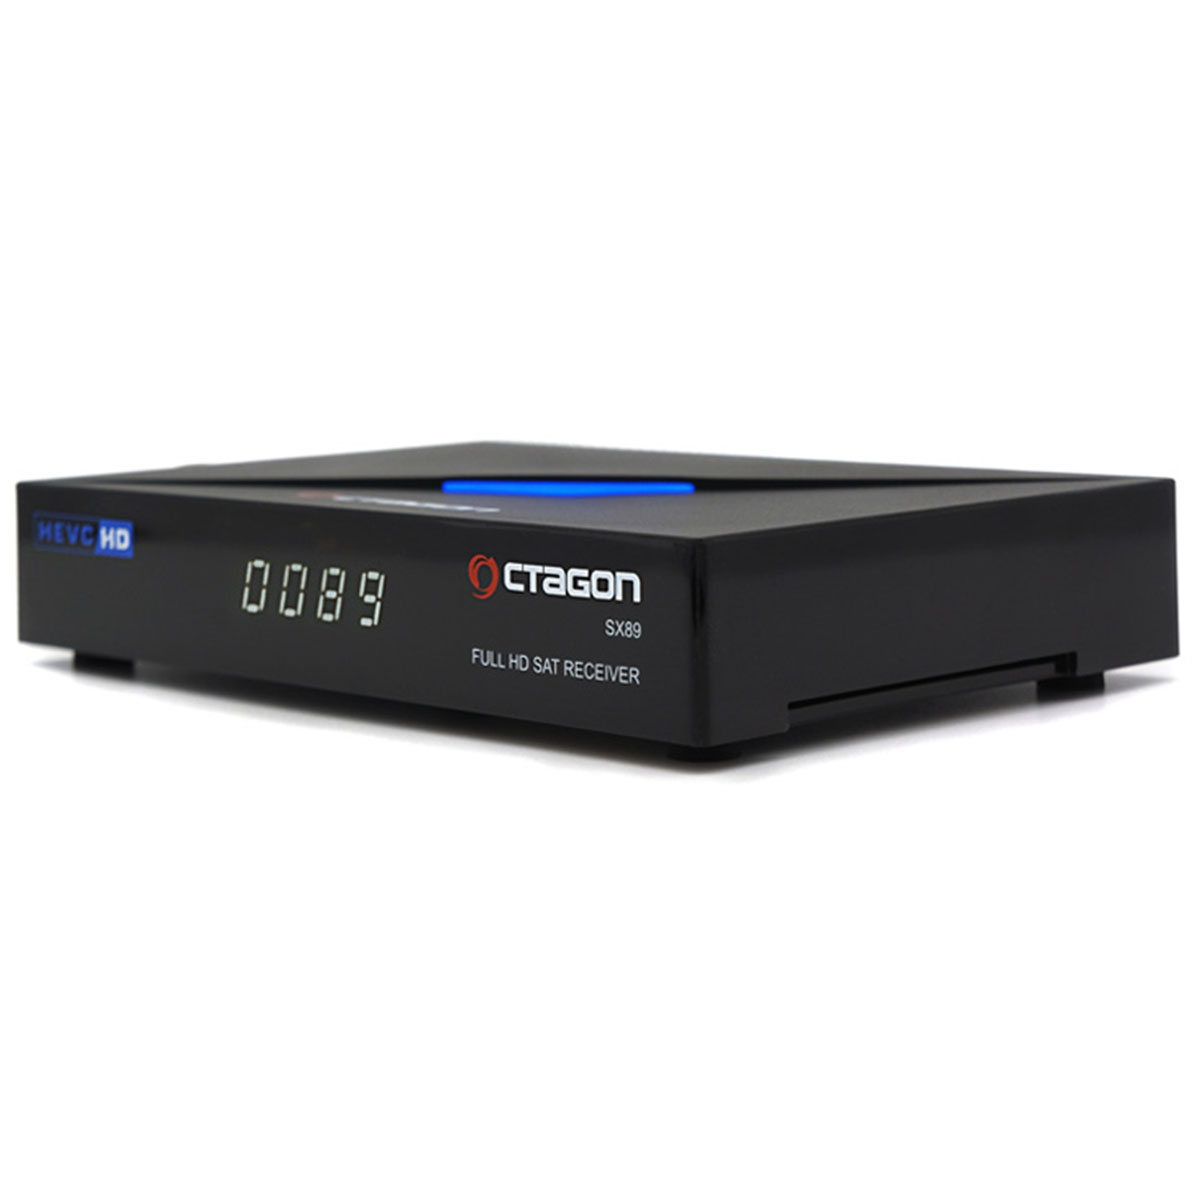 Receiver Tuner LAN IP HDMI OCTAGON (Schwarz) Receiver Sat HD Sat IP SX89 DVB-S2 H.265 Linux Full